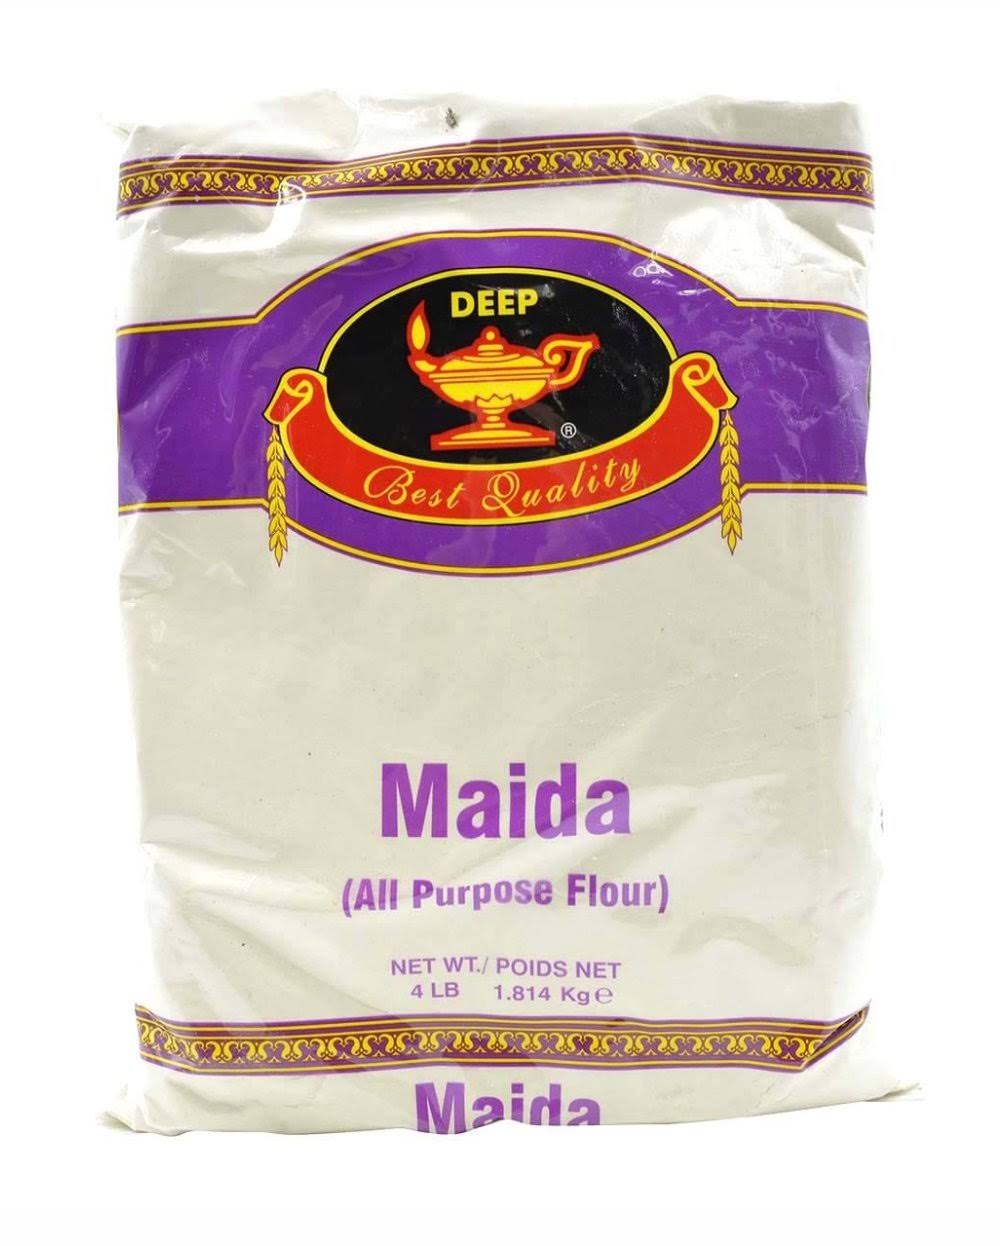 Deep Best Quality Maida (All Purpose Flour) - 4 lb